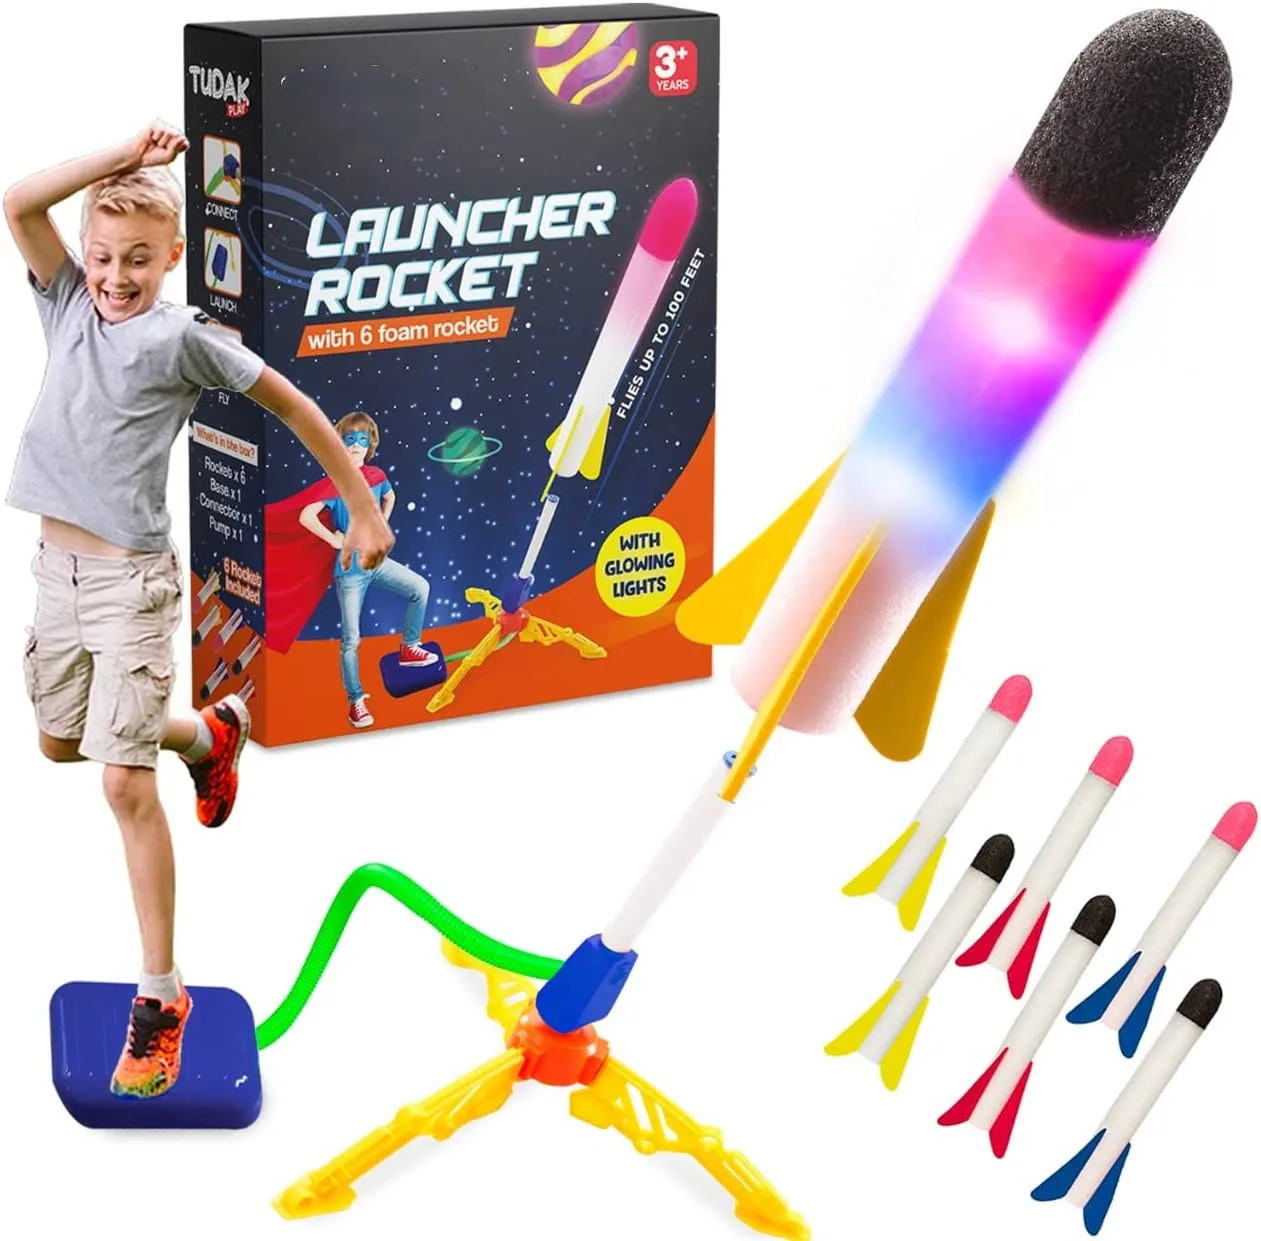 Lanzadores de cohetes prensados por aire, juego de Pedal de cohete, bomba de paso, juguete familiar para niños, juego de duelo al aire libre para niños, juguete iluminado